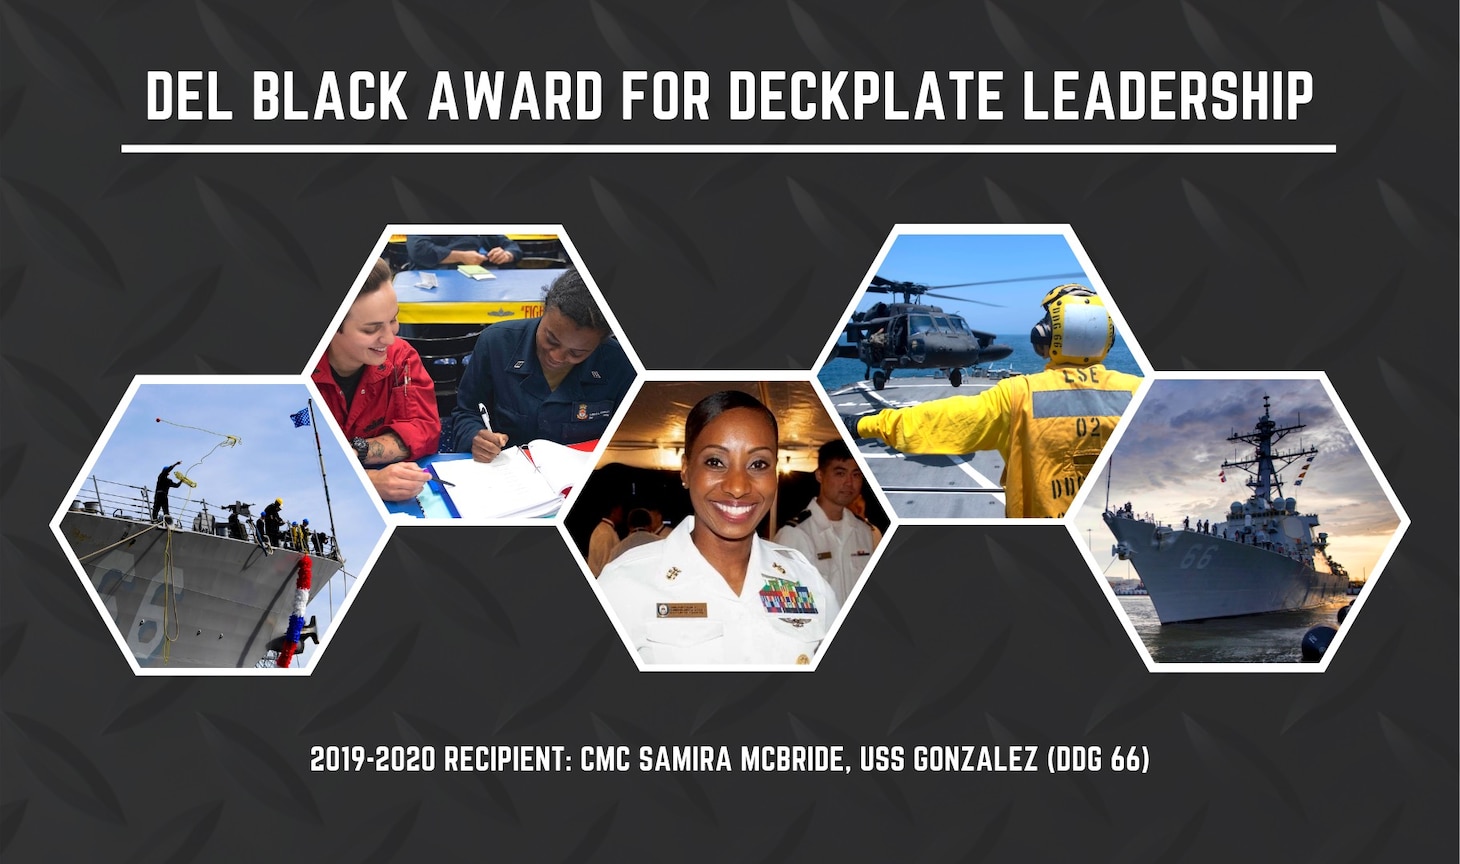 Del Black Award info-graphic with photo of winner CMC Samira McBride